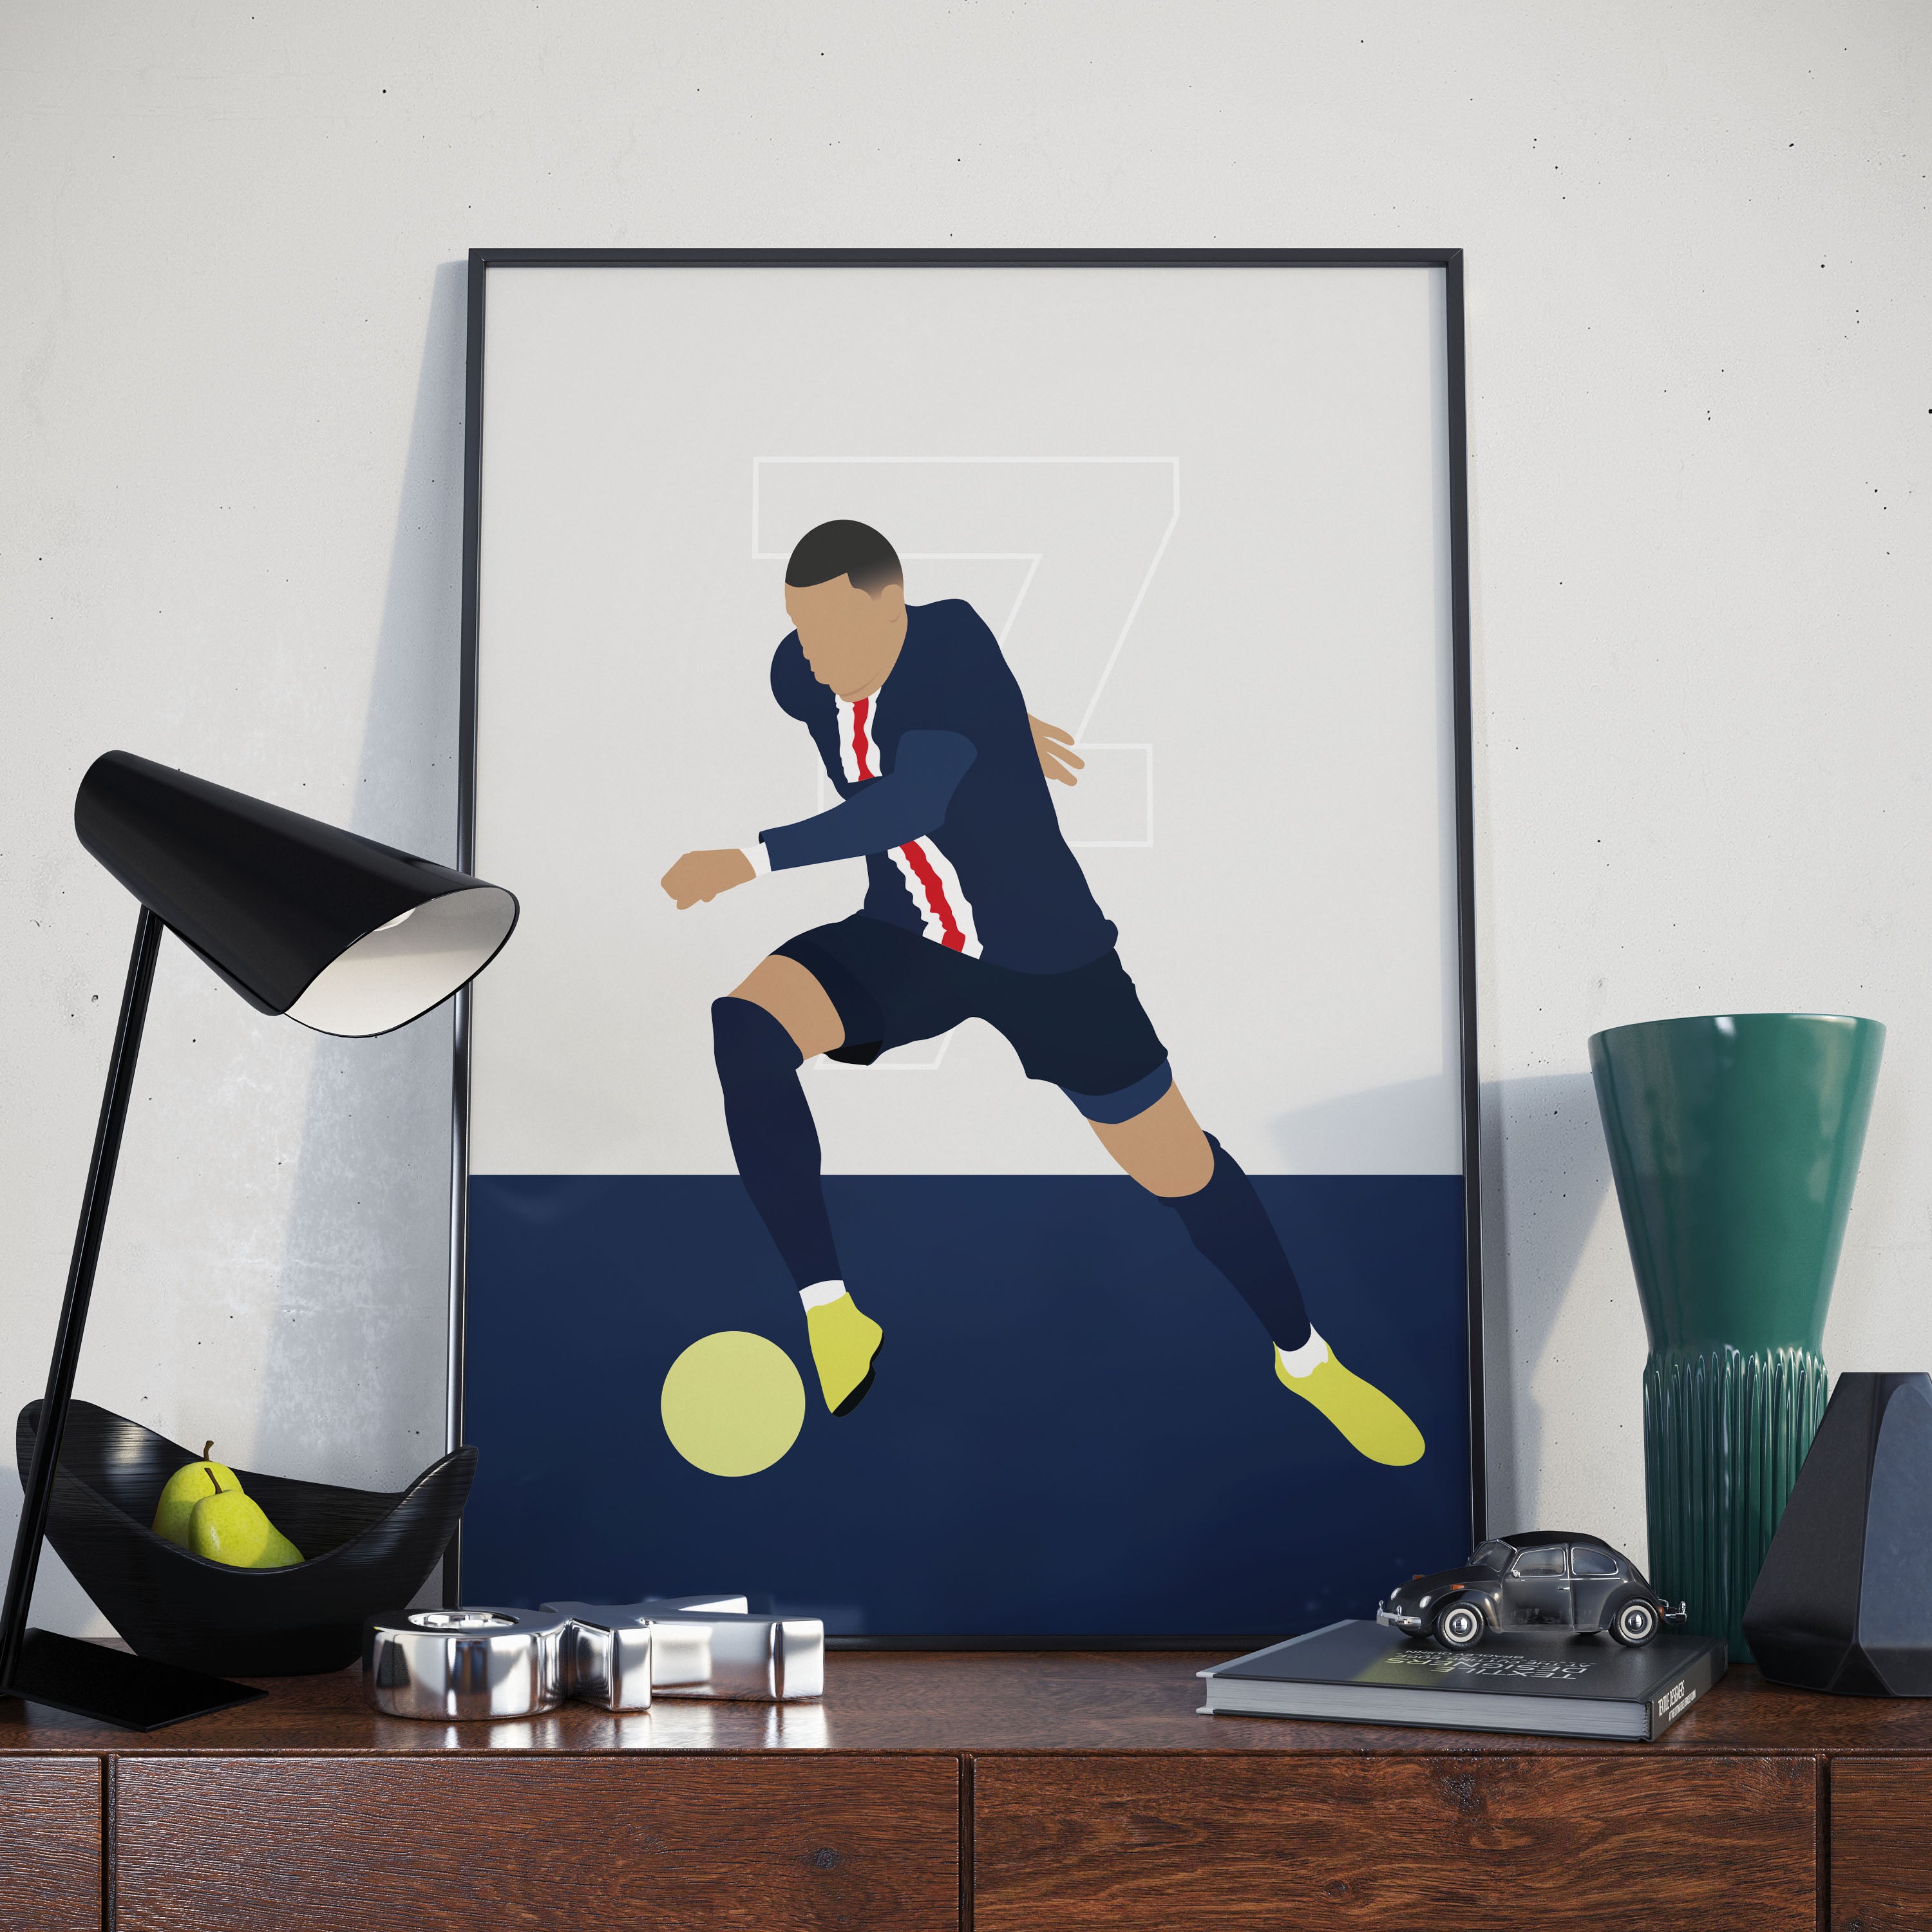 Affiche Football PSG - Illustration Kylian Mbappé 40 x 60 cm PSG